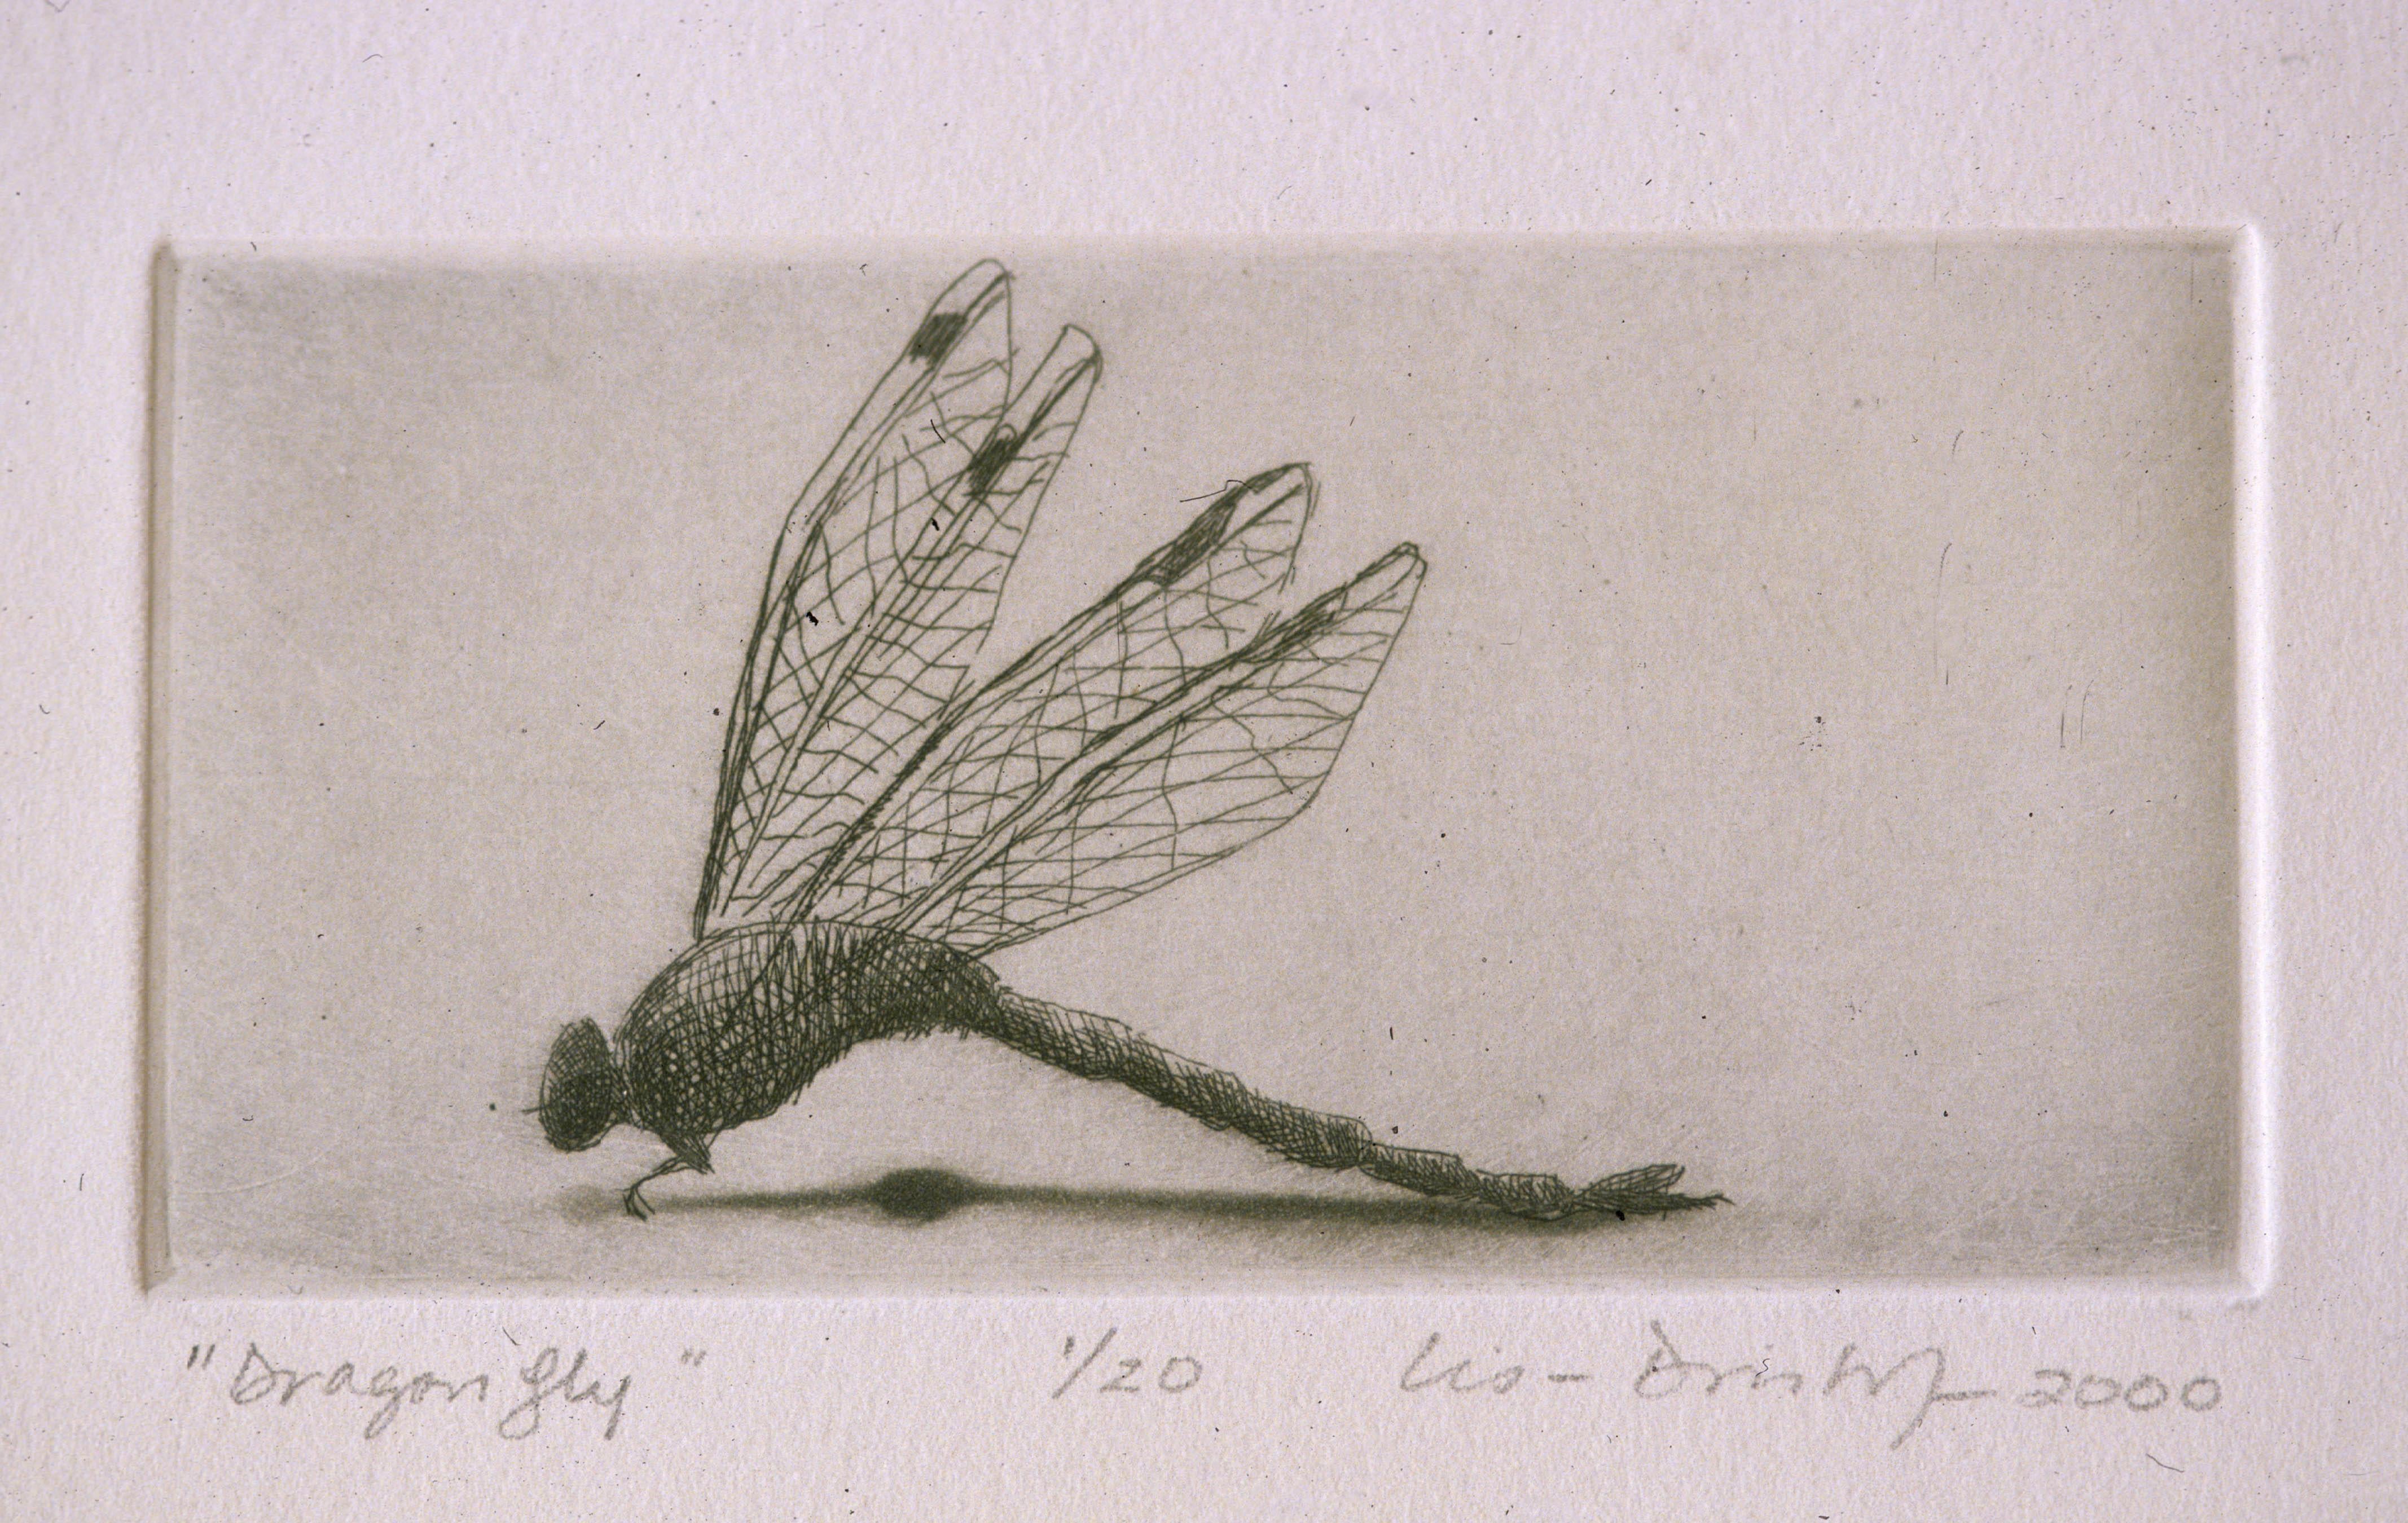 Lisa Dinhofer Animal Print - Dragonfly : Monochrome etching